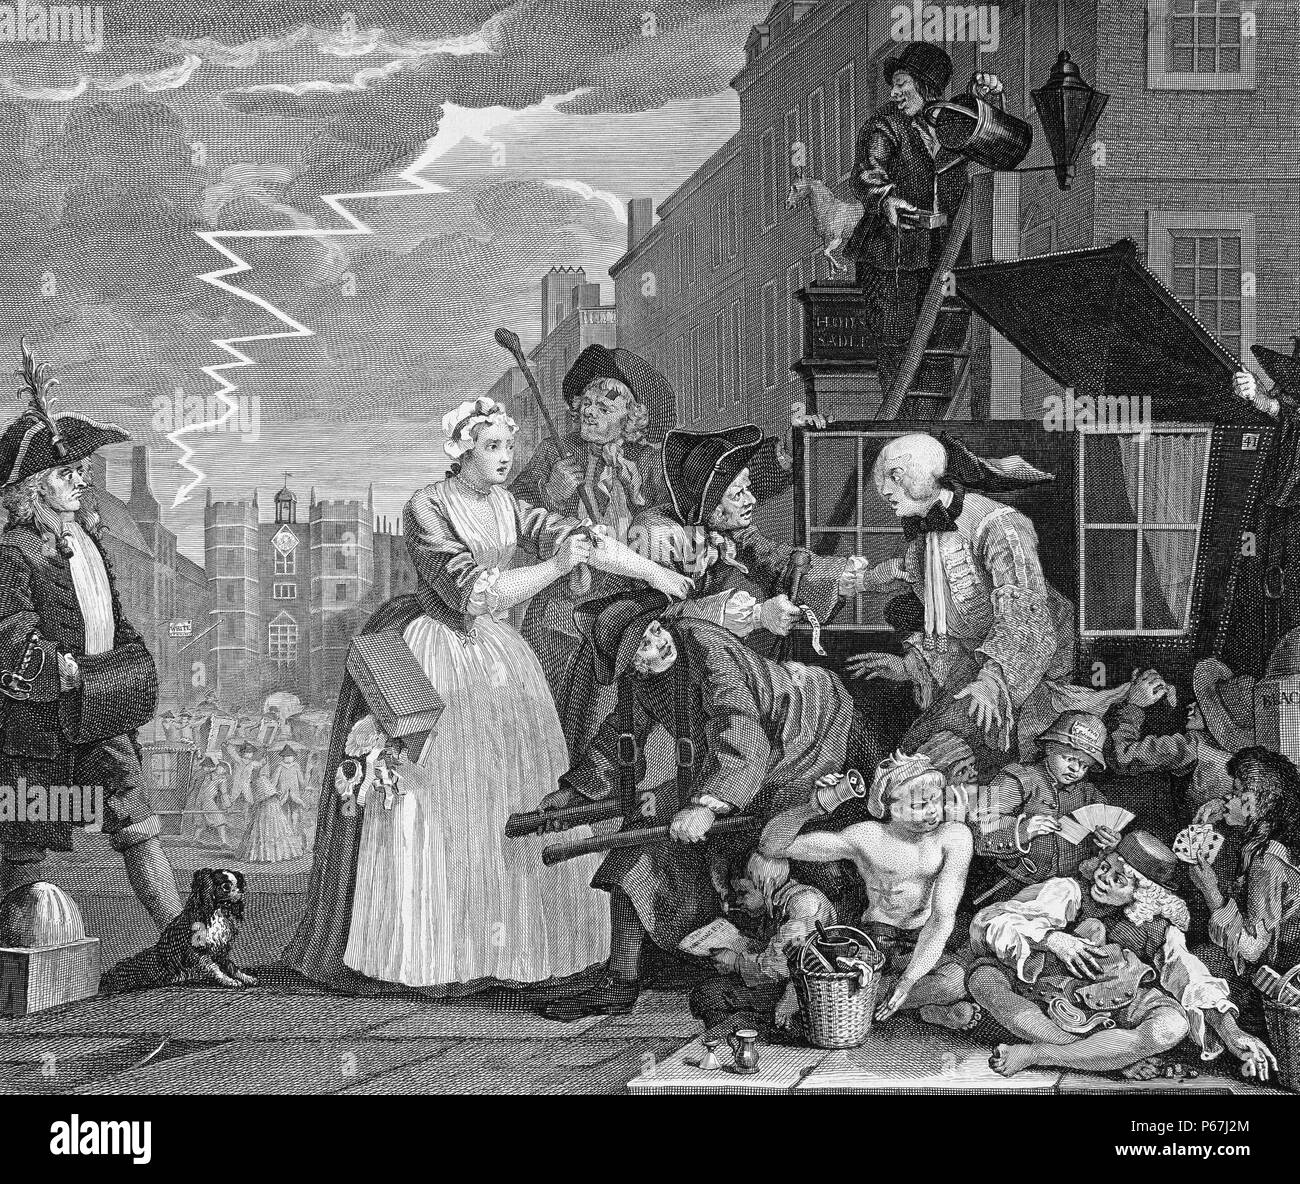 18th century london prostitution